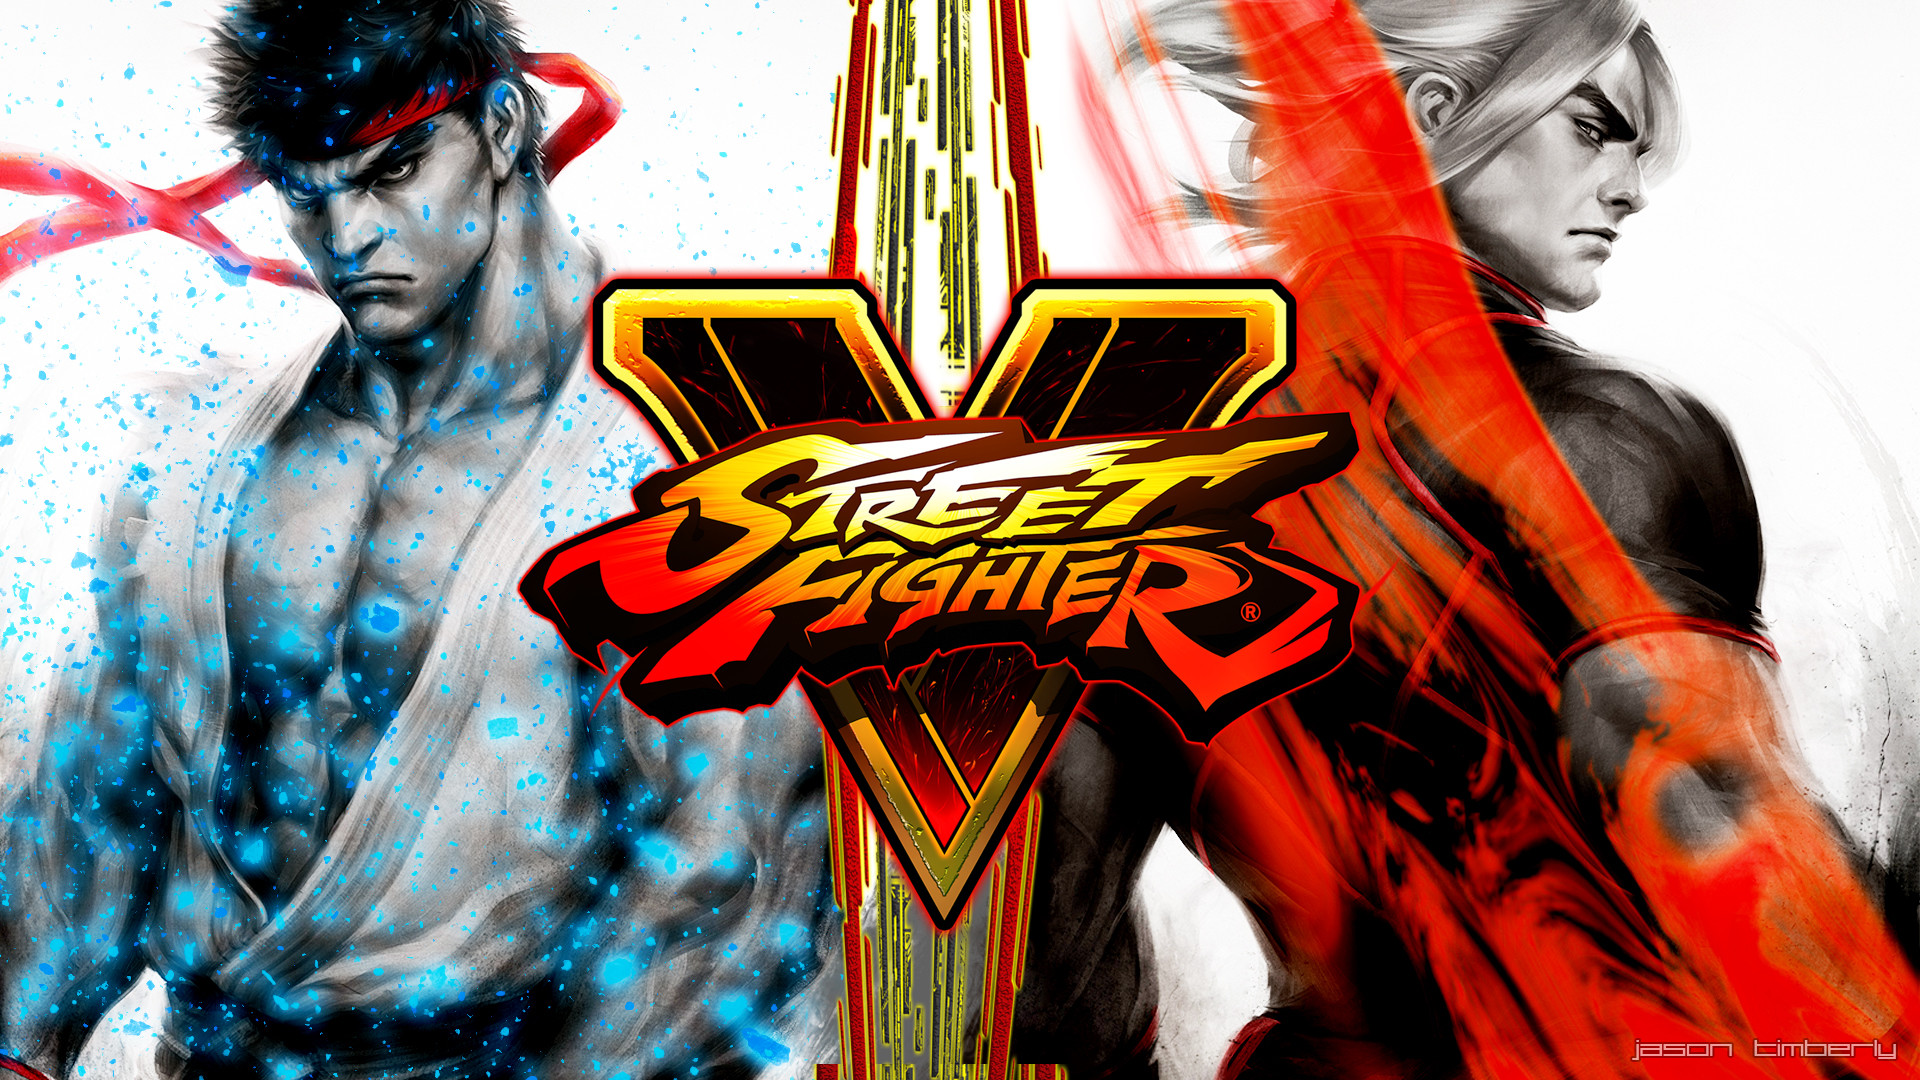 1920x1080 Street Fighter Backgrounds Free Download | PixelsTalk.Net